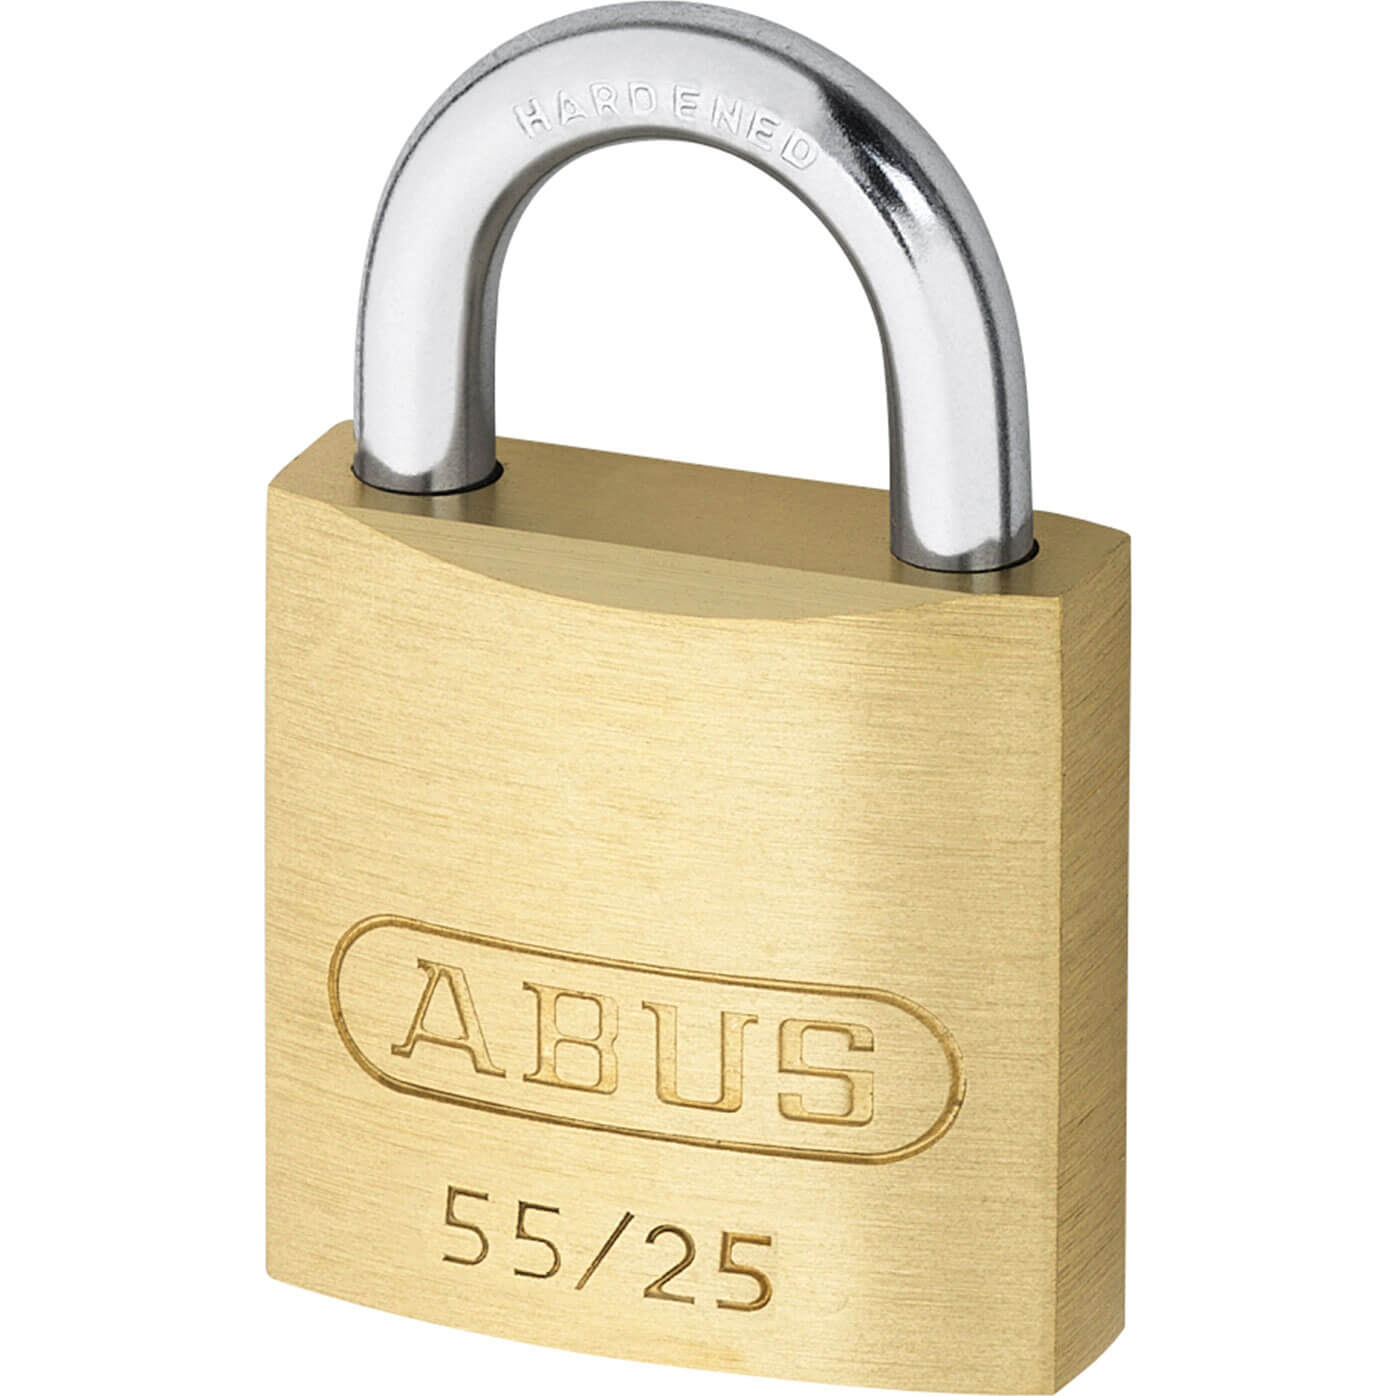 Image of Abus 55 Series Basic Brass Padlock Keyed Alike 25mm Standard 5251